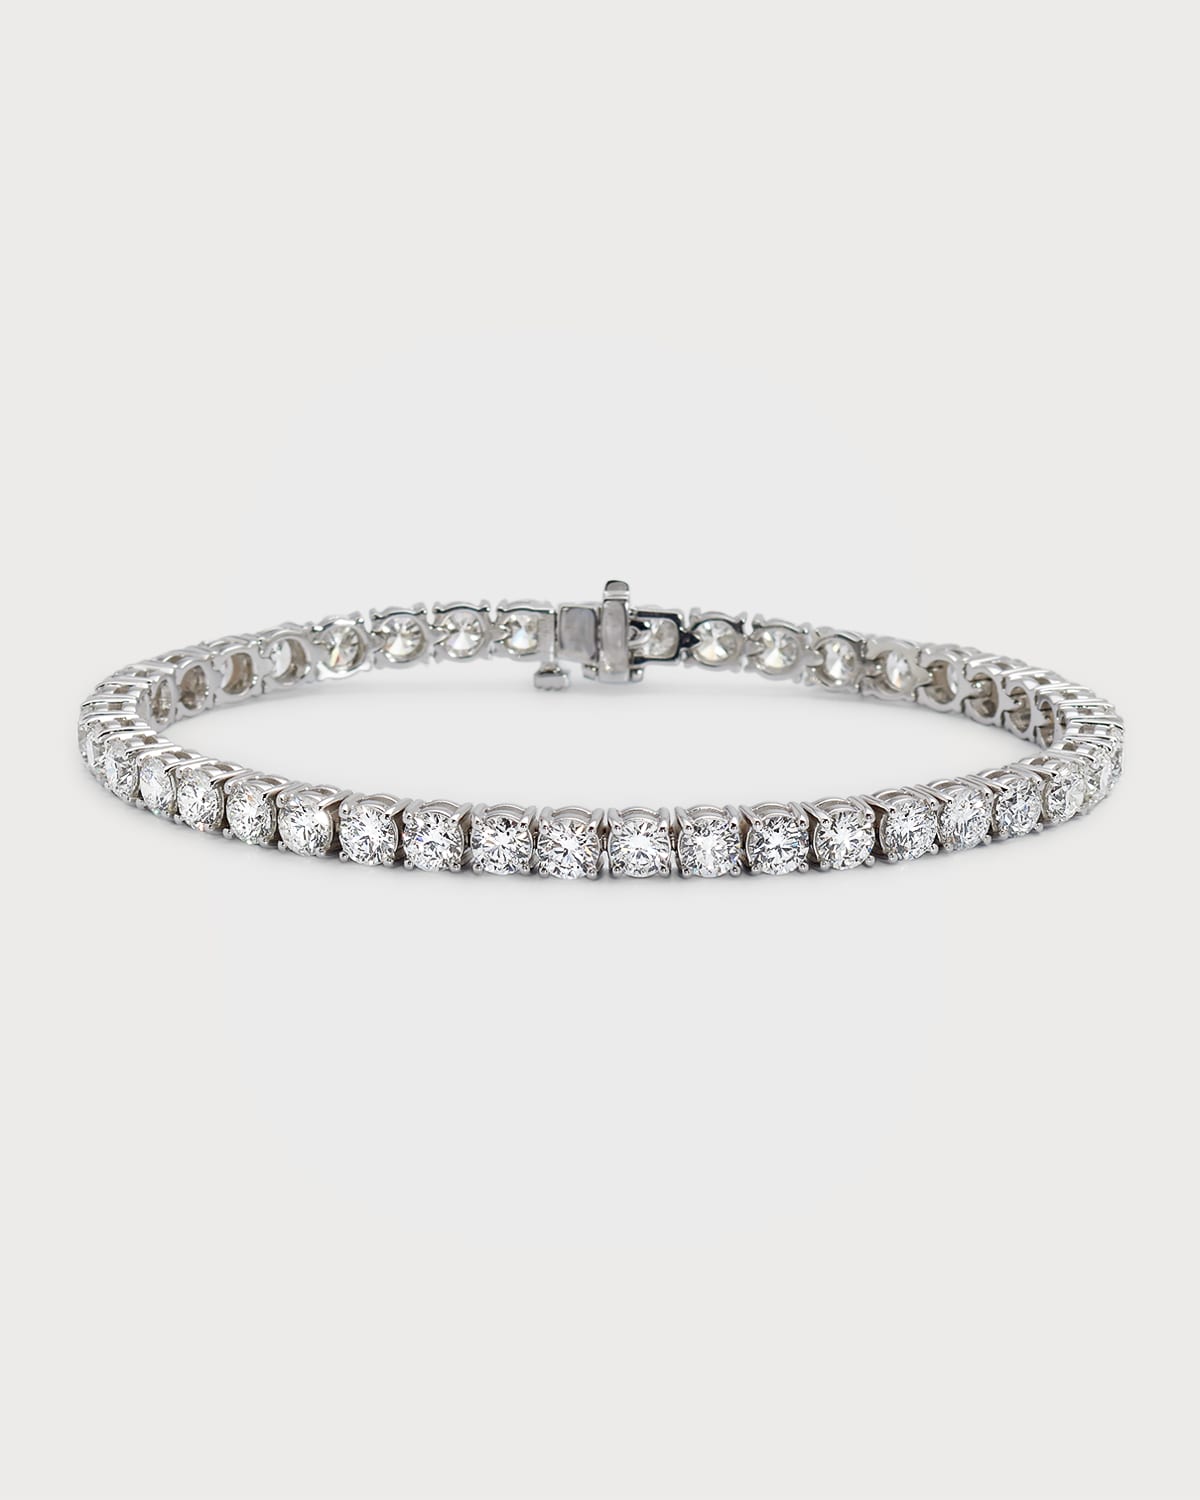 Neiman Marcus Diamonds 18k White Gold Diamond Bracelet, 7"l, 11.48tcw